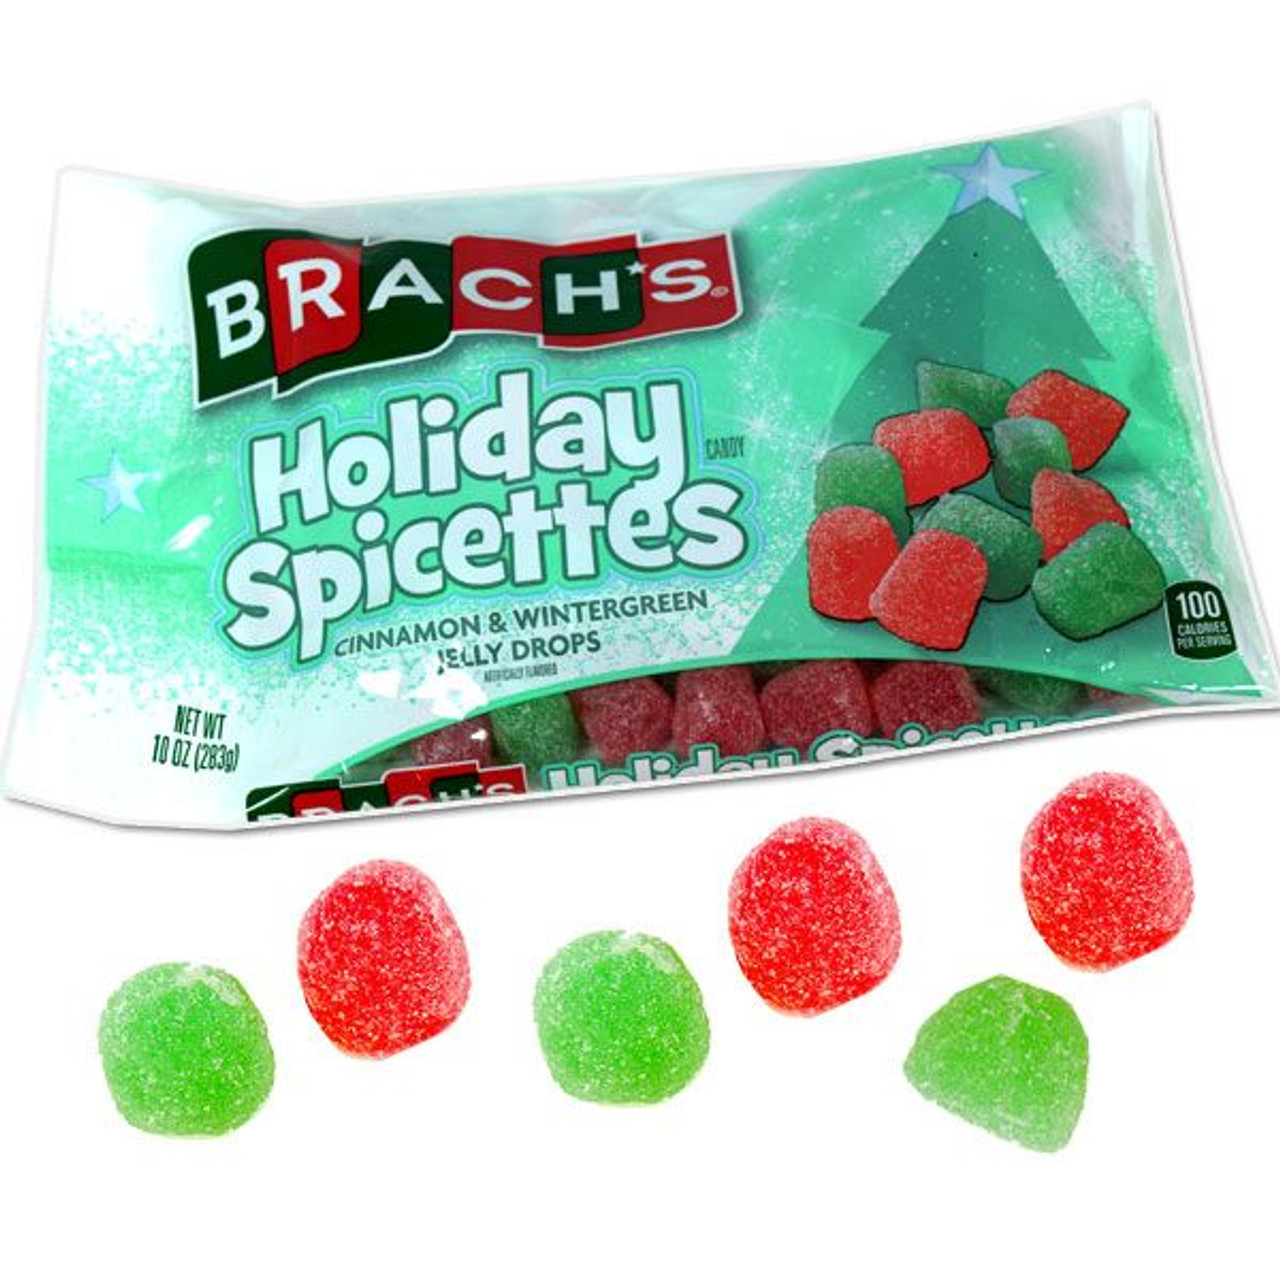 Brach's Holiday Spicettes 10oz Bag